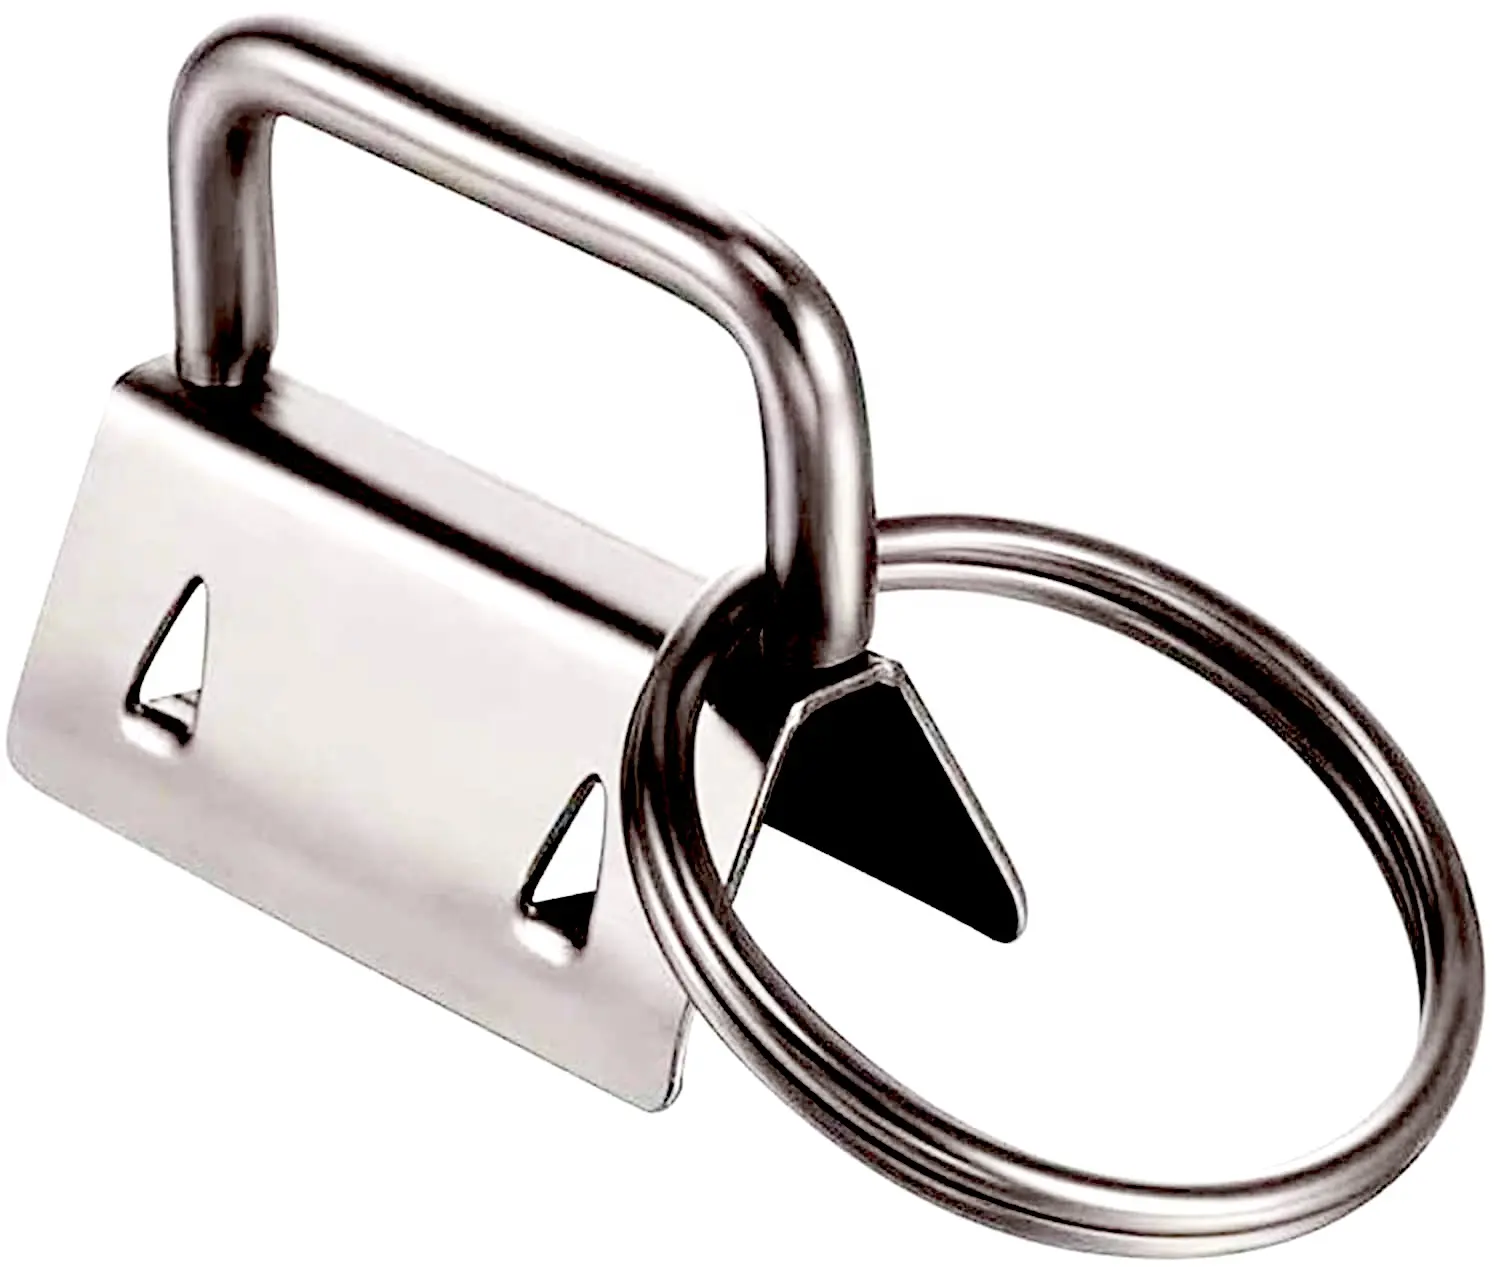 25mm metal silver wristlet 1 inch key ring key fob hardware with split key ring